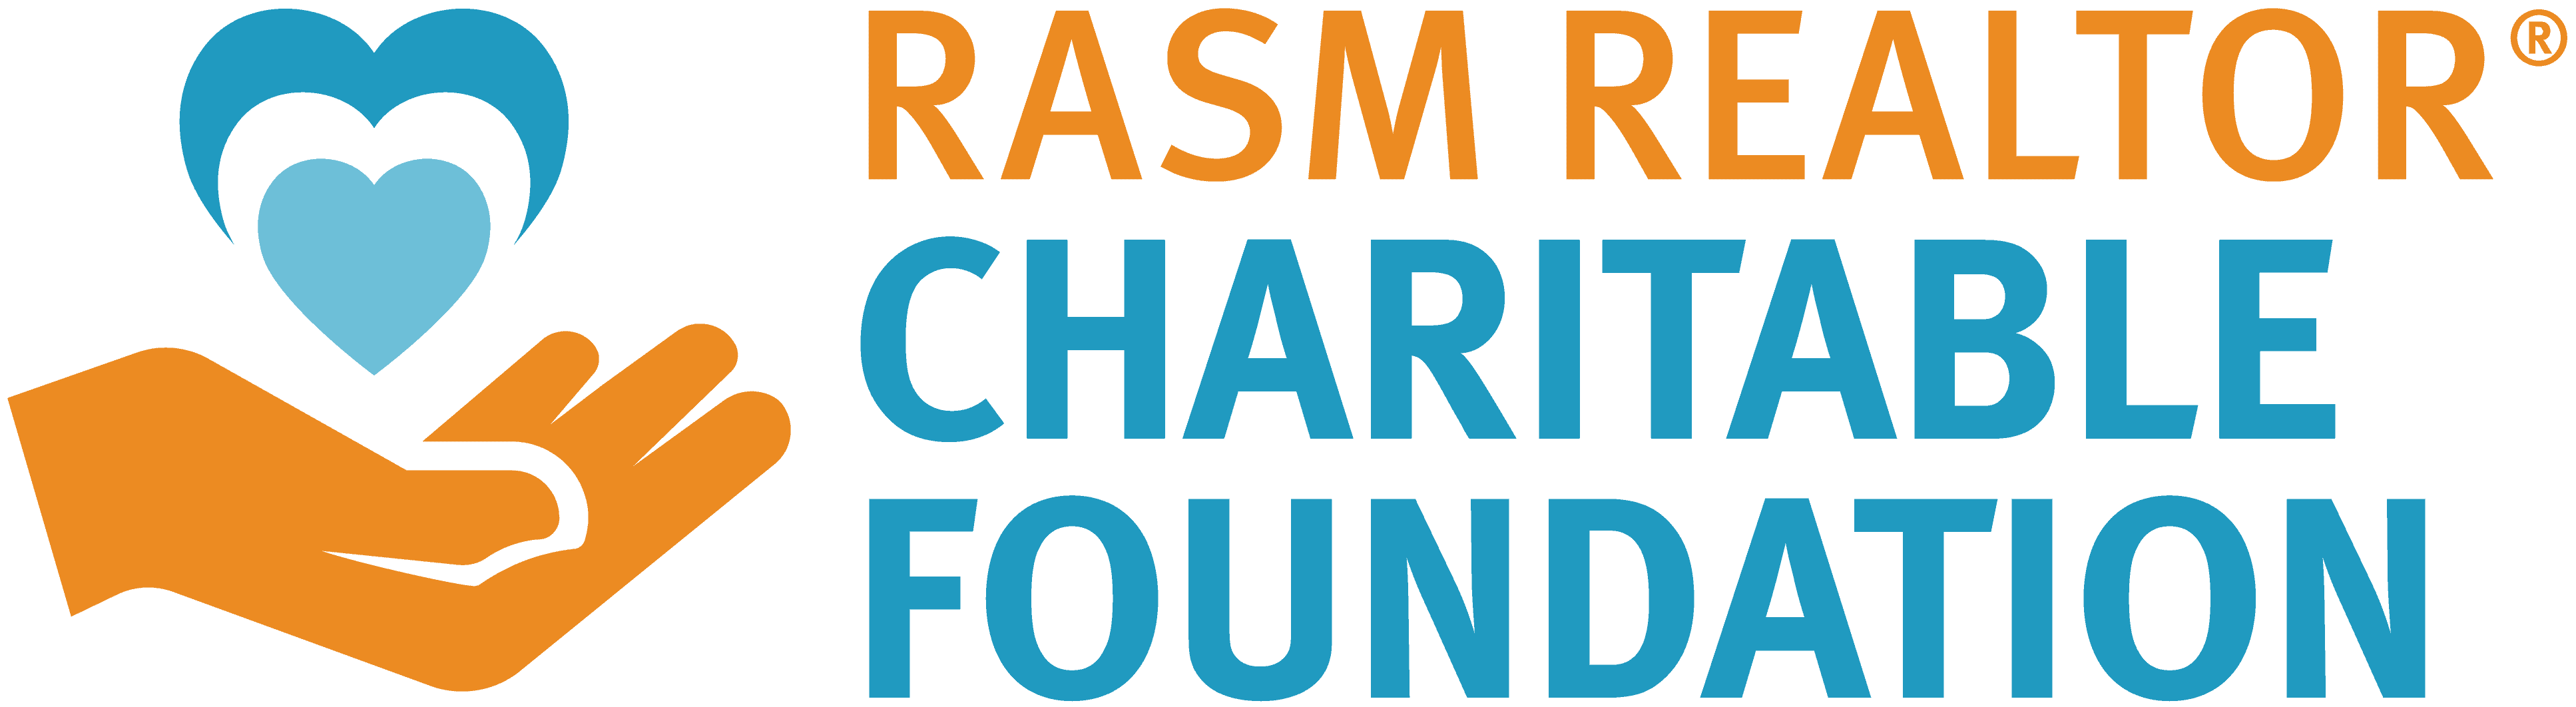 RASM REALTOR® Charitable Foundation